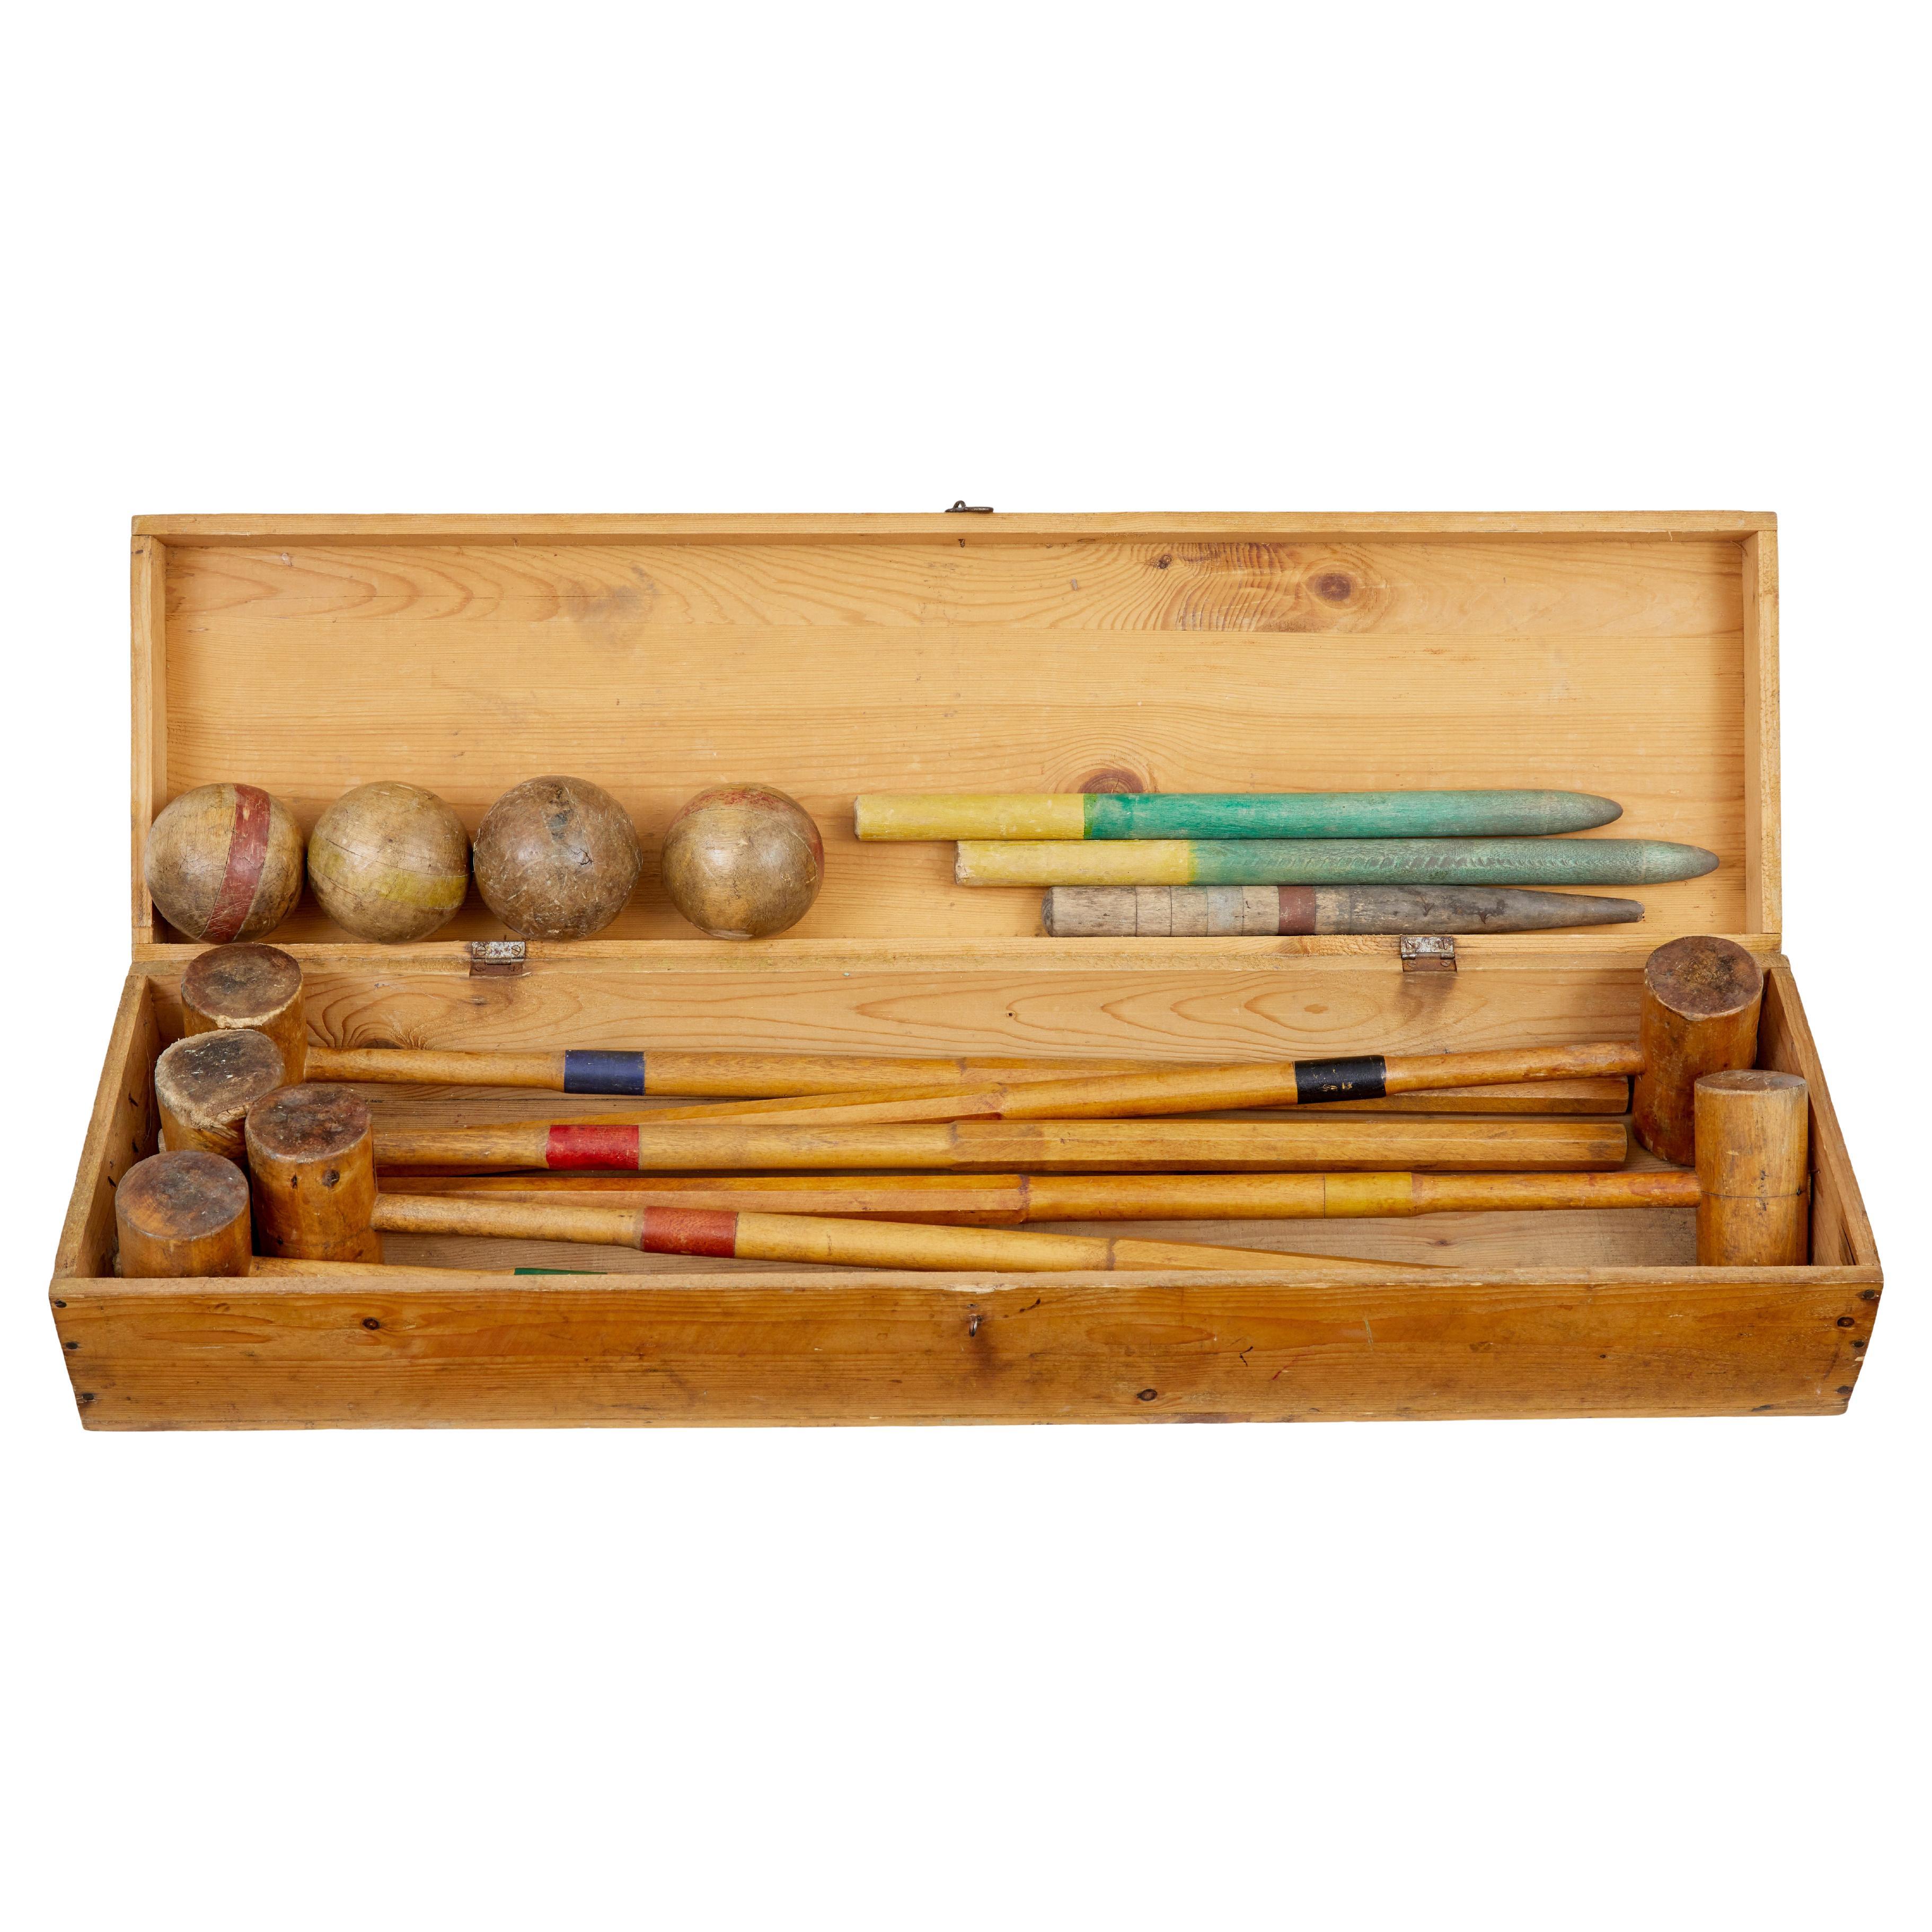 20th century croquet set in pine box